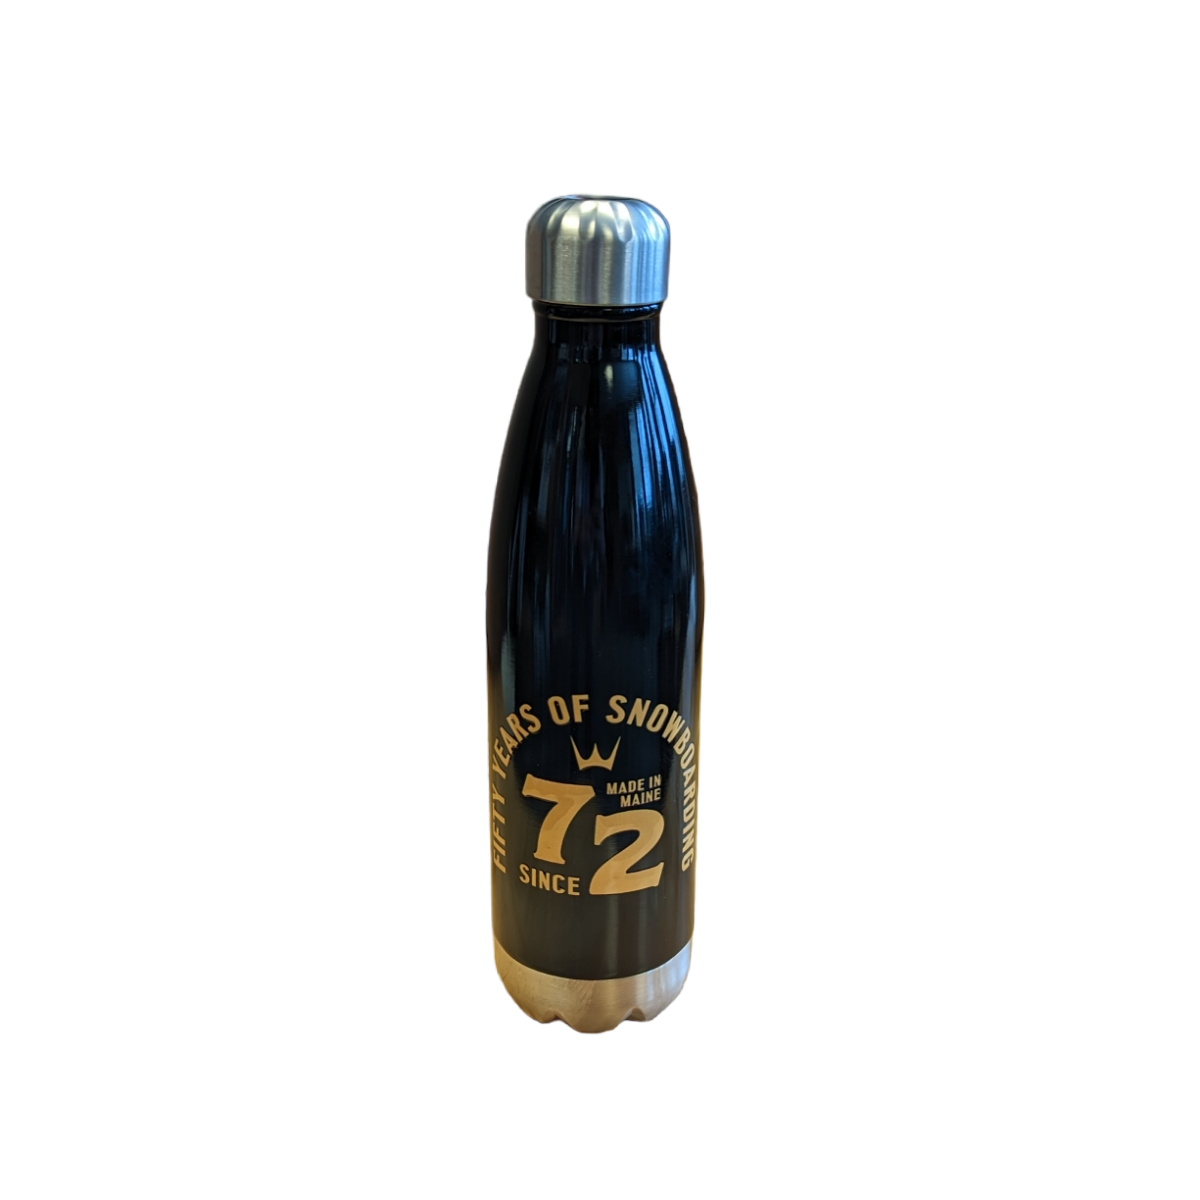 Wholesale Glass Double Wall Water Bottle- 17oz- Black/Clear CLEAR/BLACK